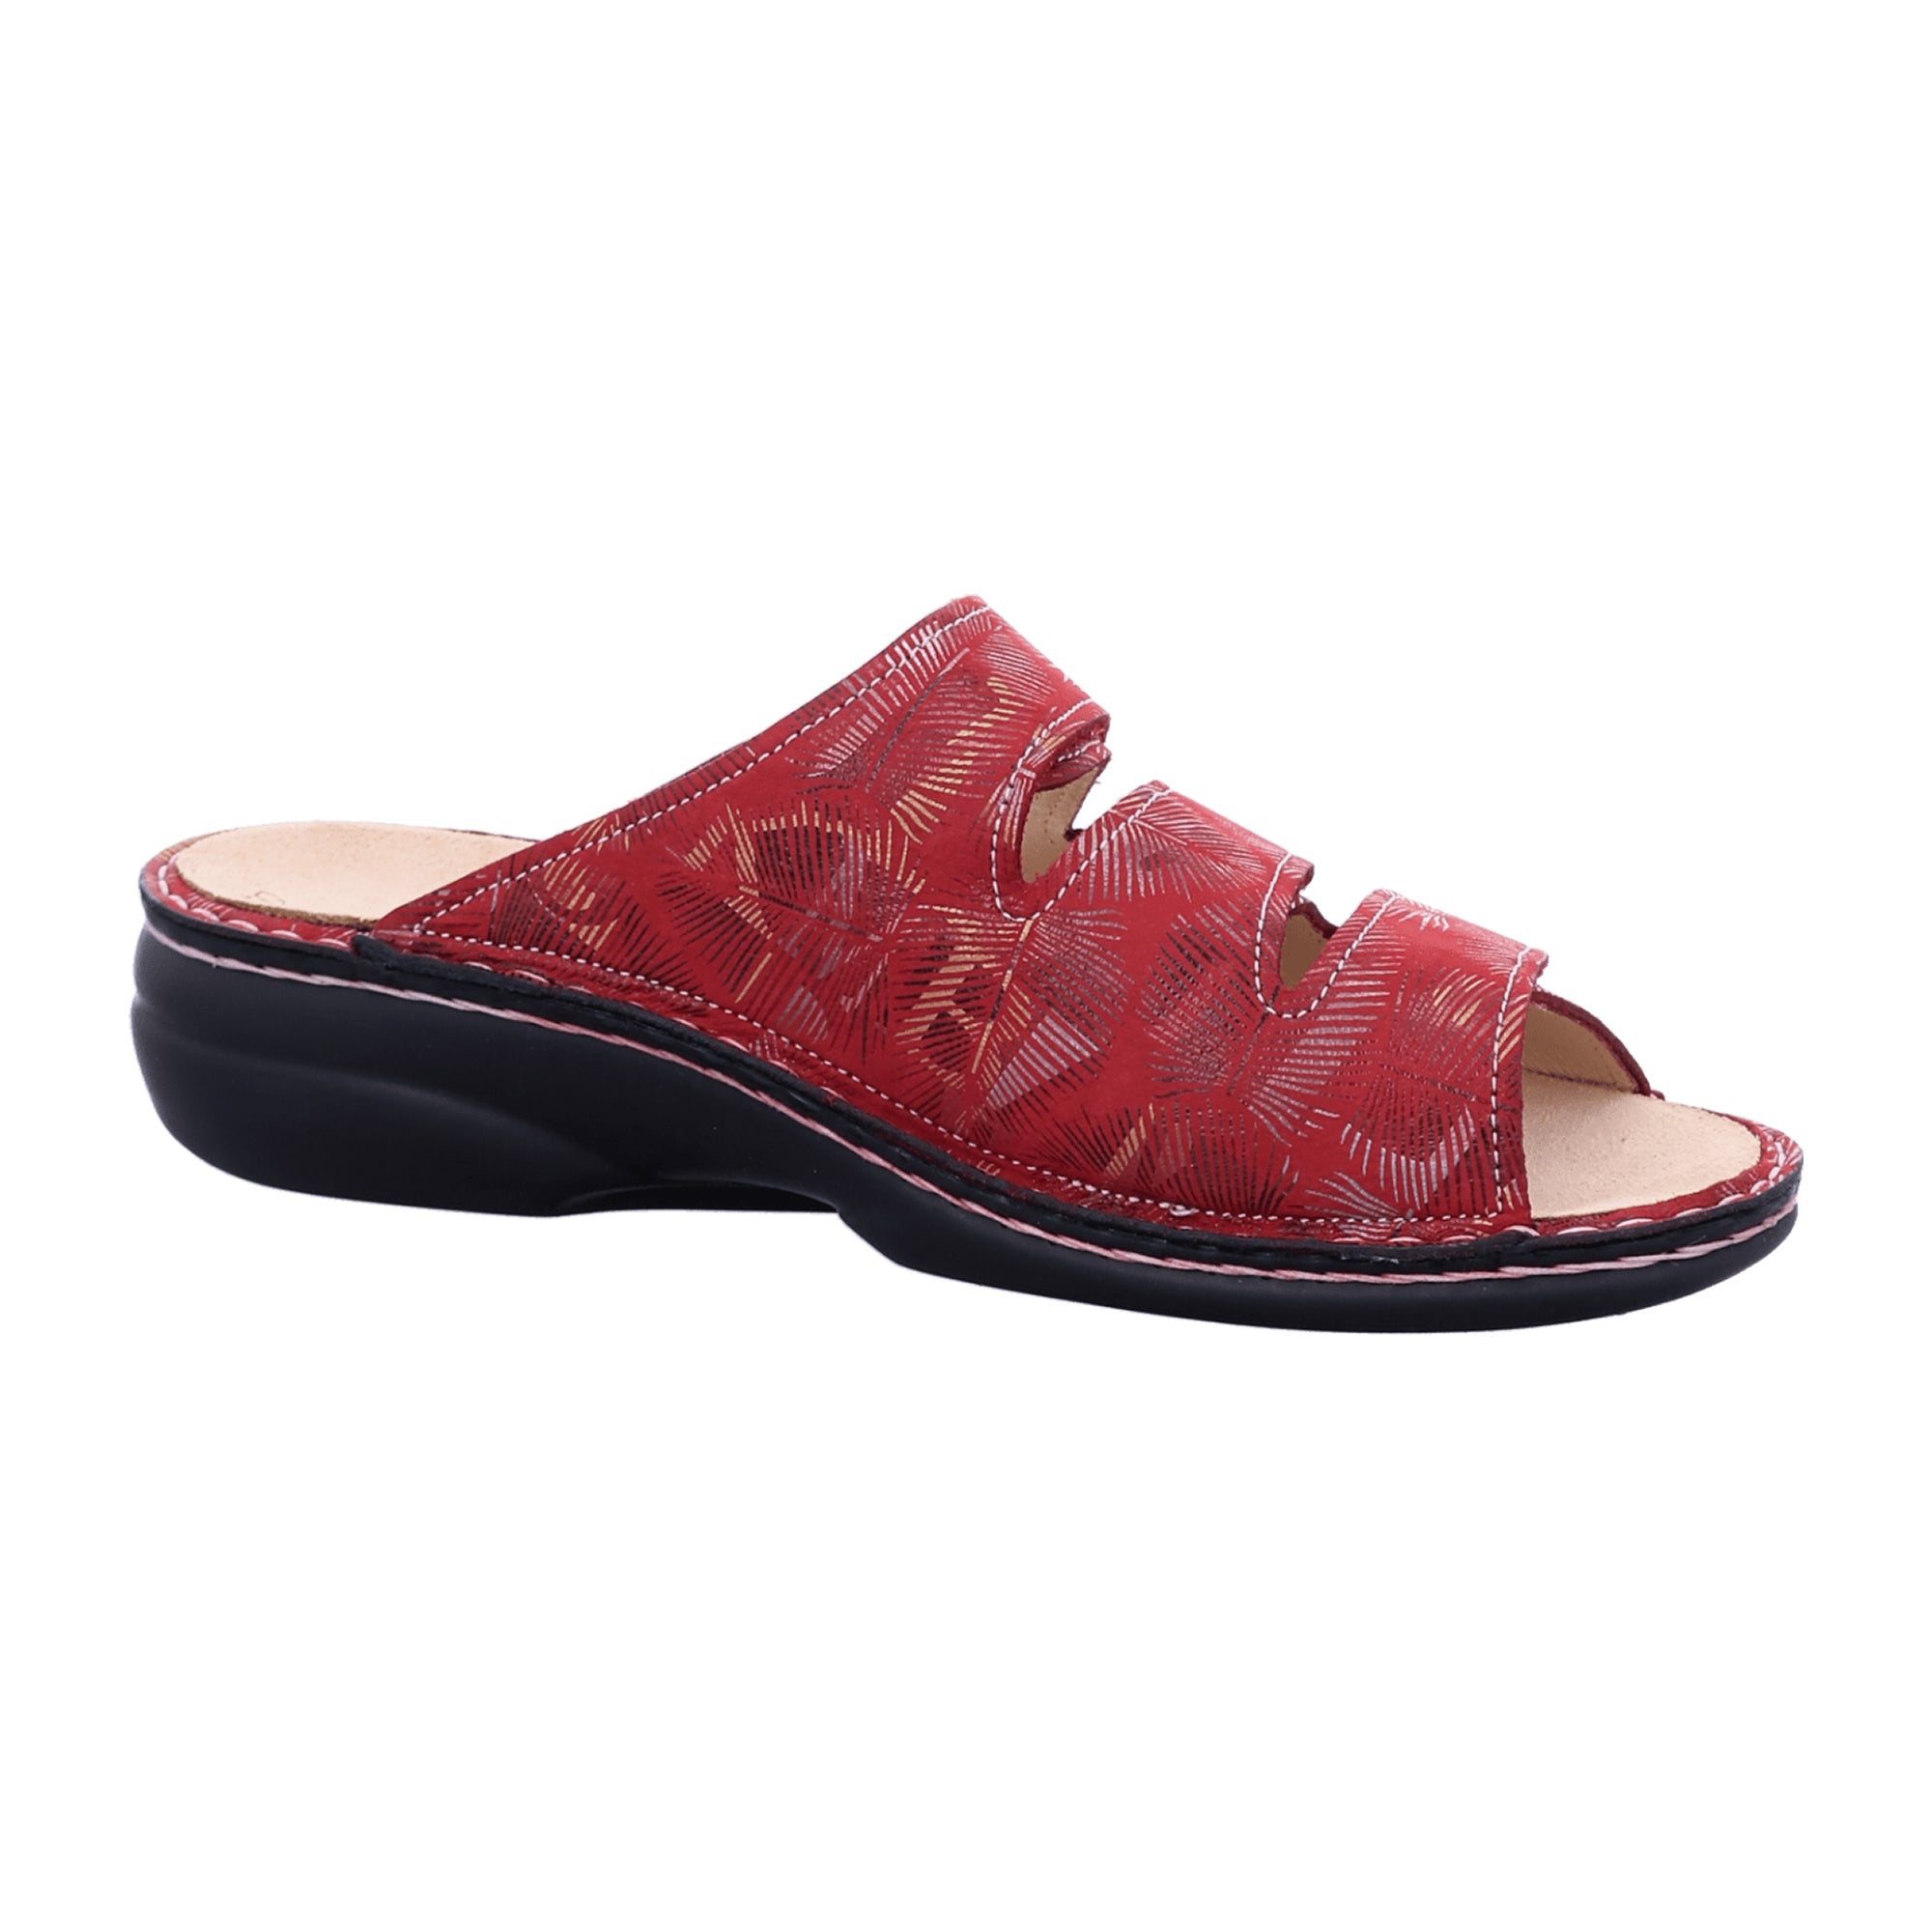 Finn Comfort Kos Red Sandals for Women | Stylish & Durable Comfort Footwear